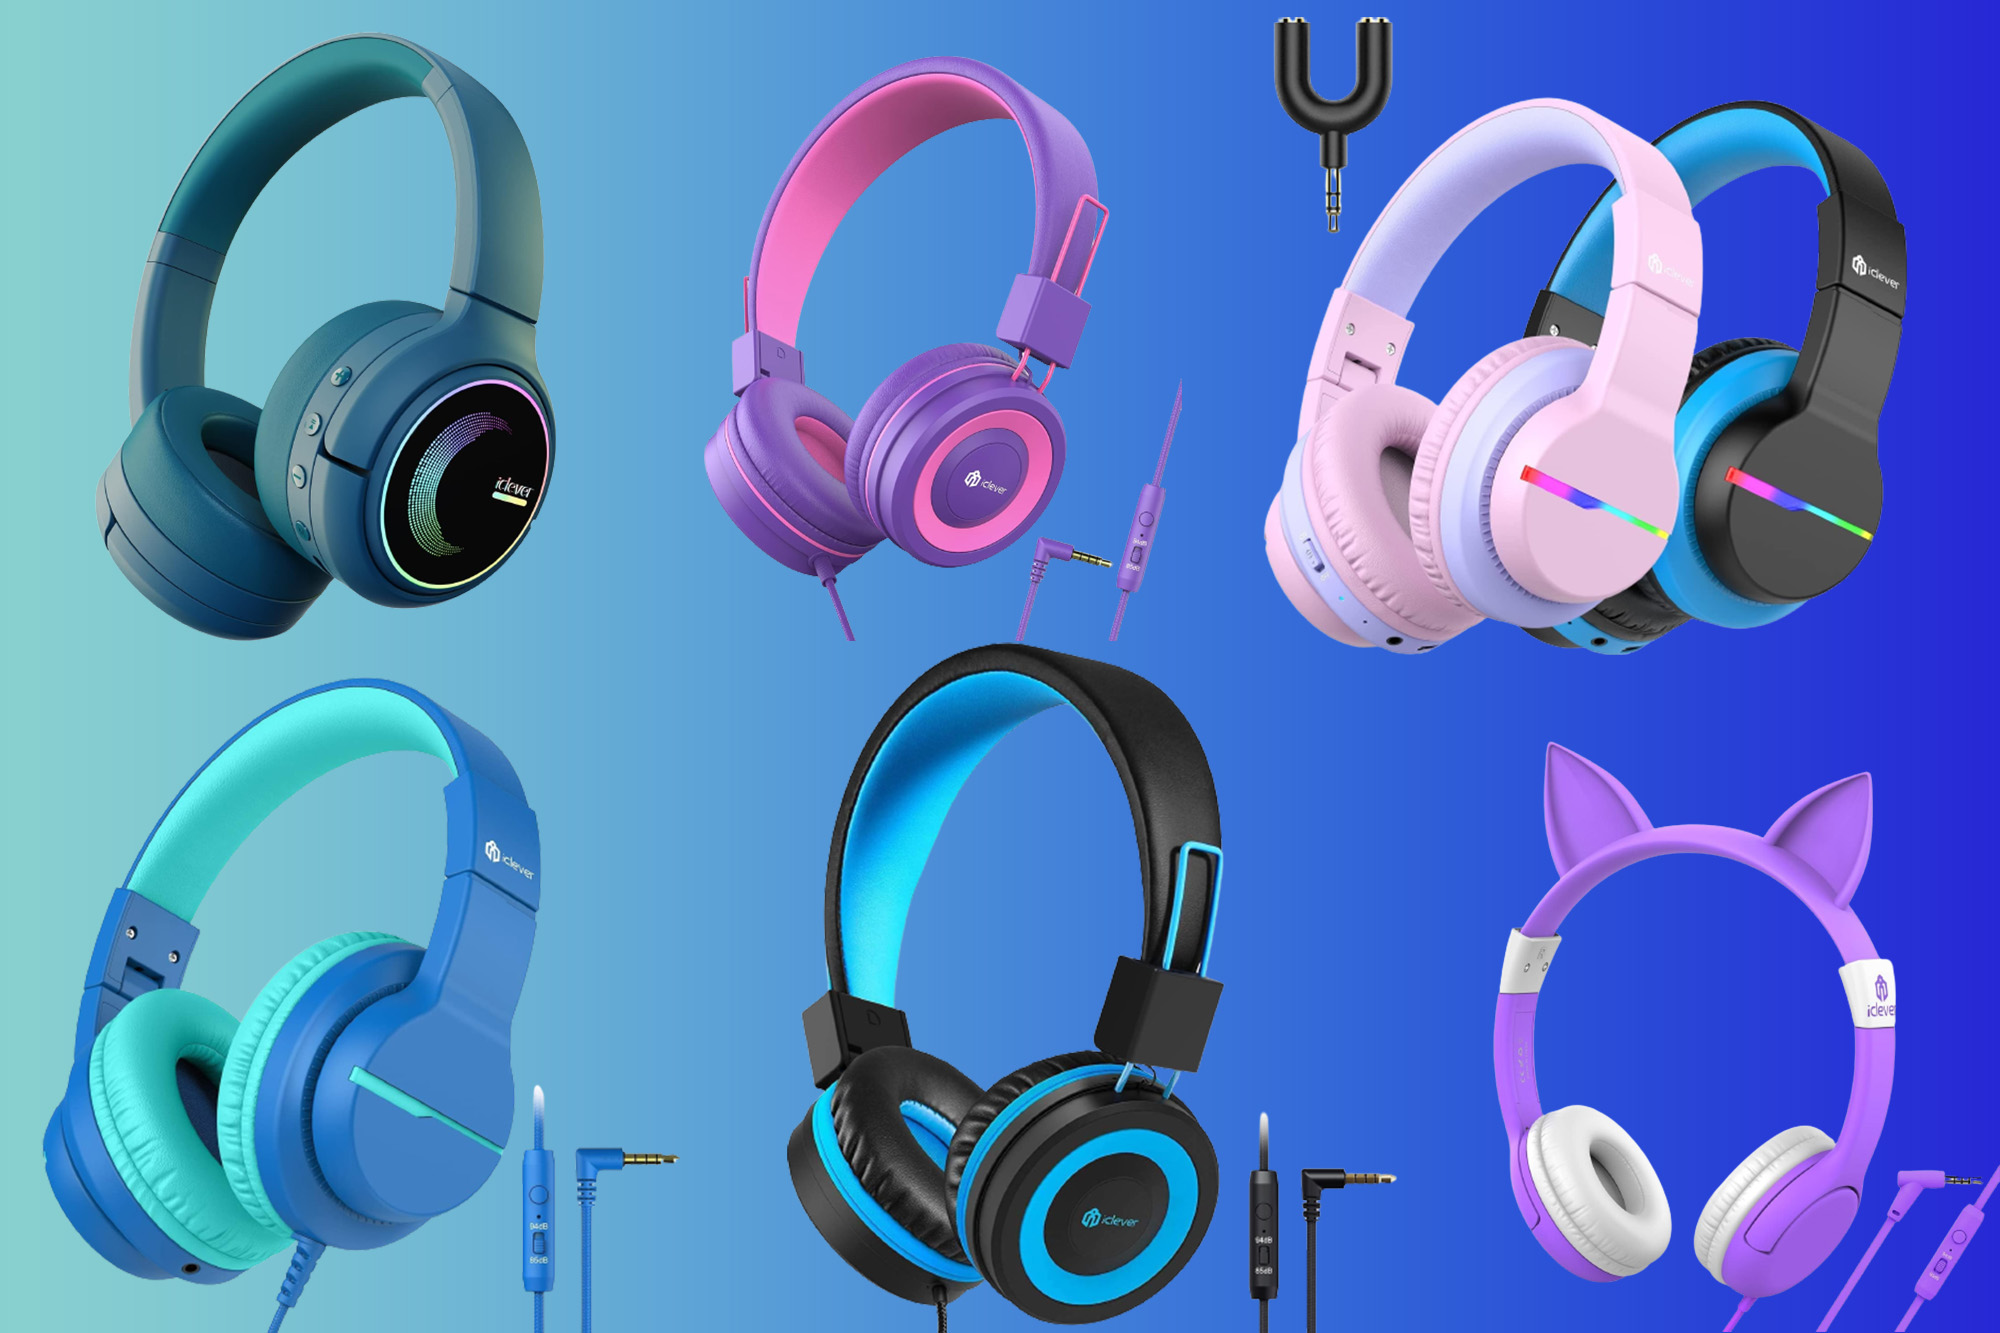 Gift your kid fun headphones with 20% off iClever on Amazon